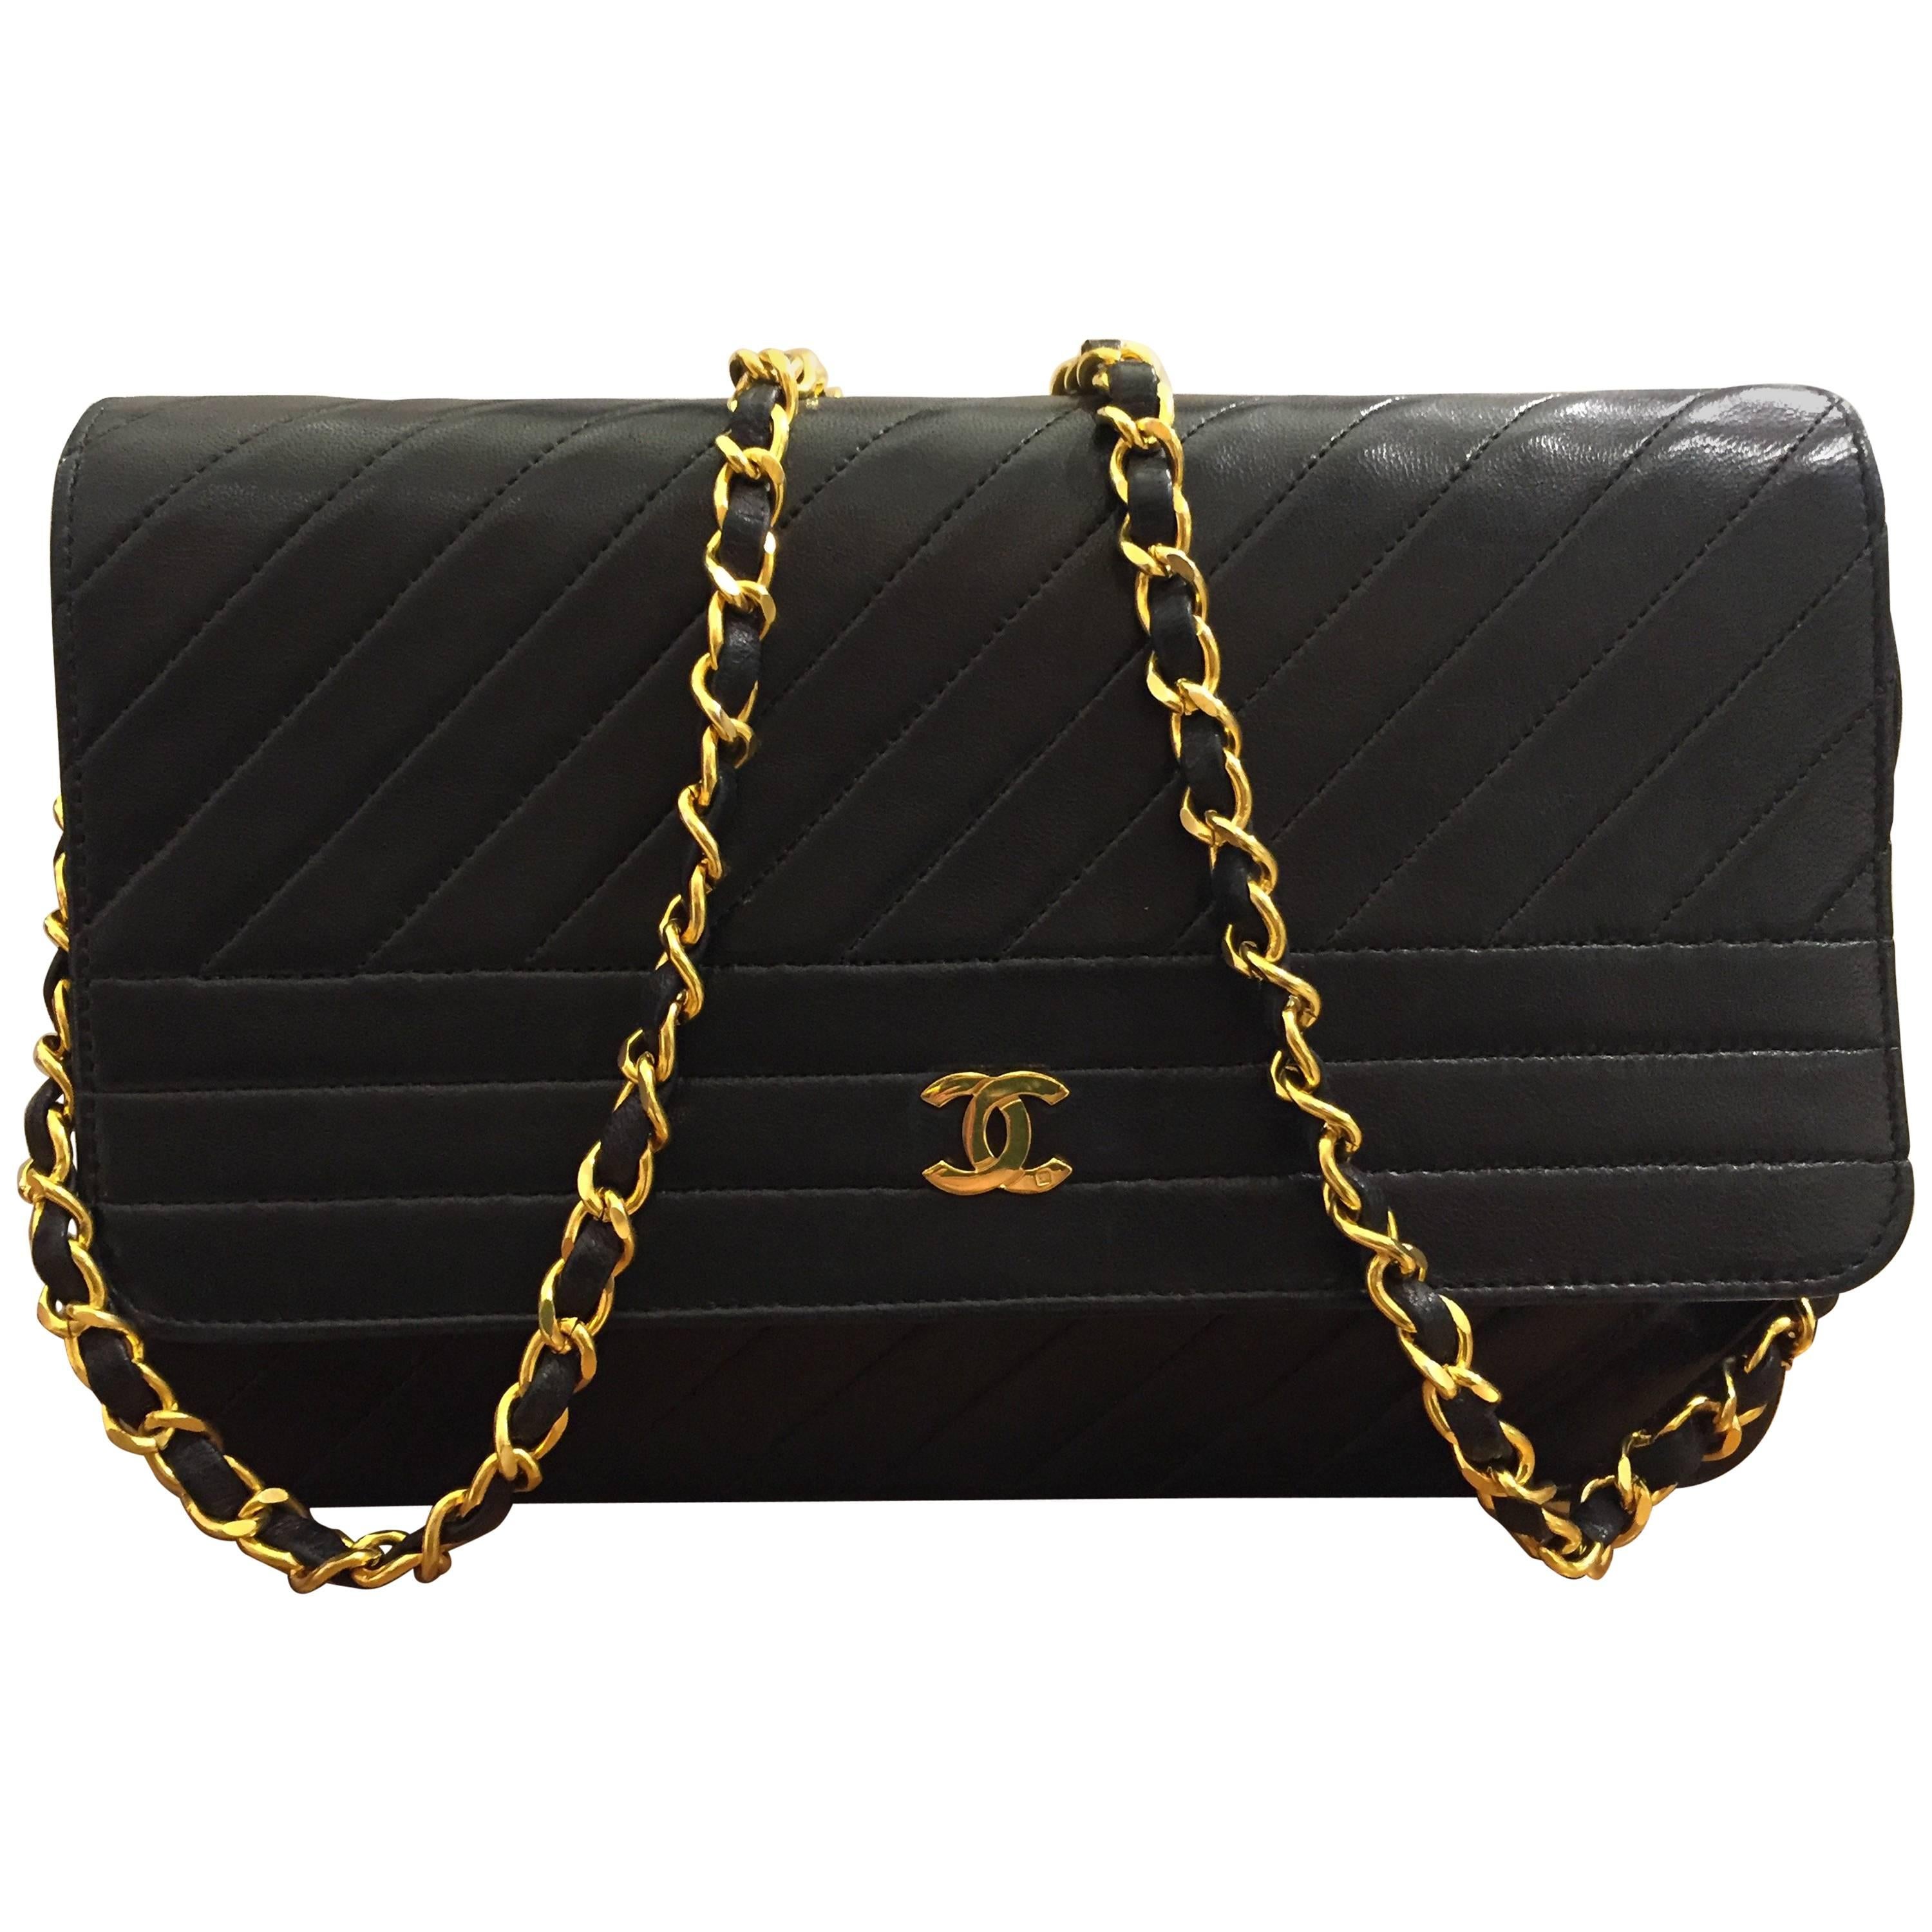 Chanel Classic Black Lambskin Quilted Stripes Shoulder Bag